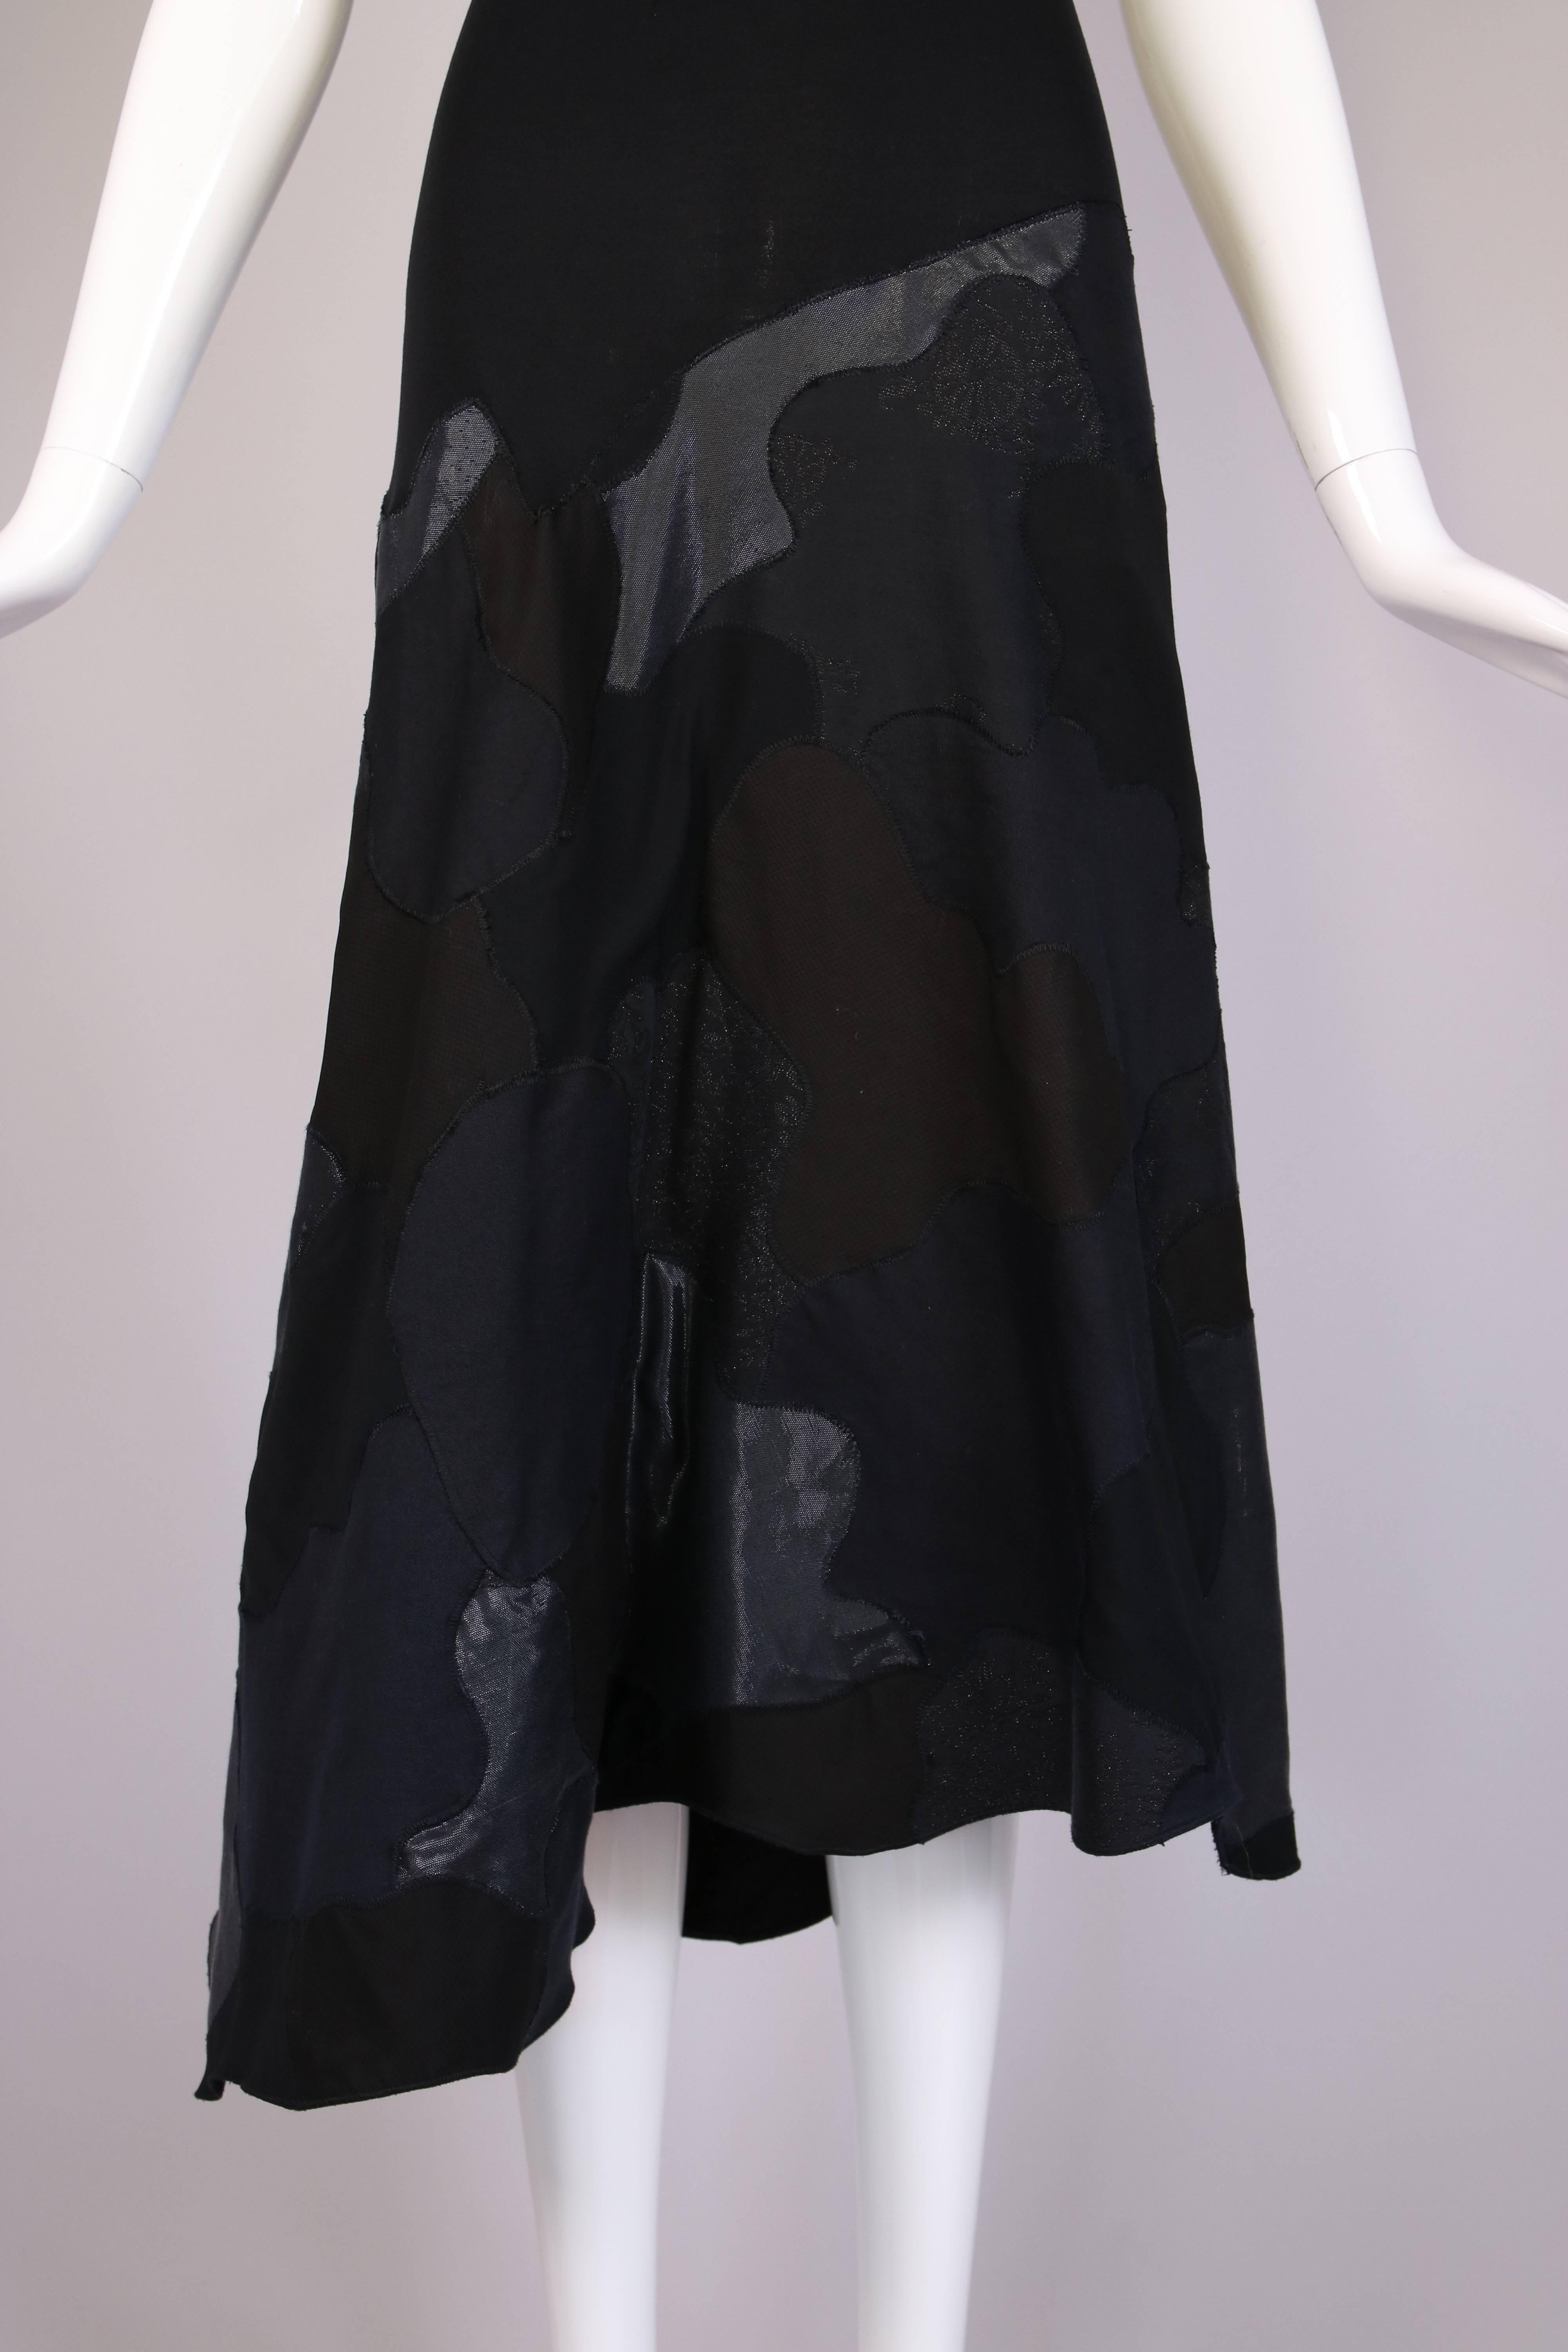 Alexander McQueen Black Stretch Tank Dress w/Appliqued Print Ca.2003 In Excellent Condition For Sale In Studio City, CA